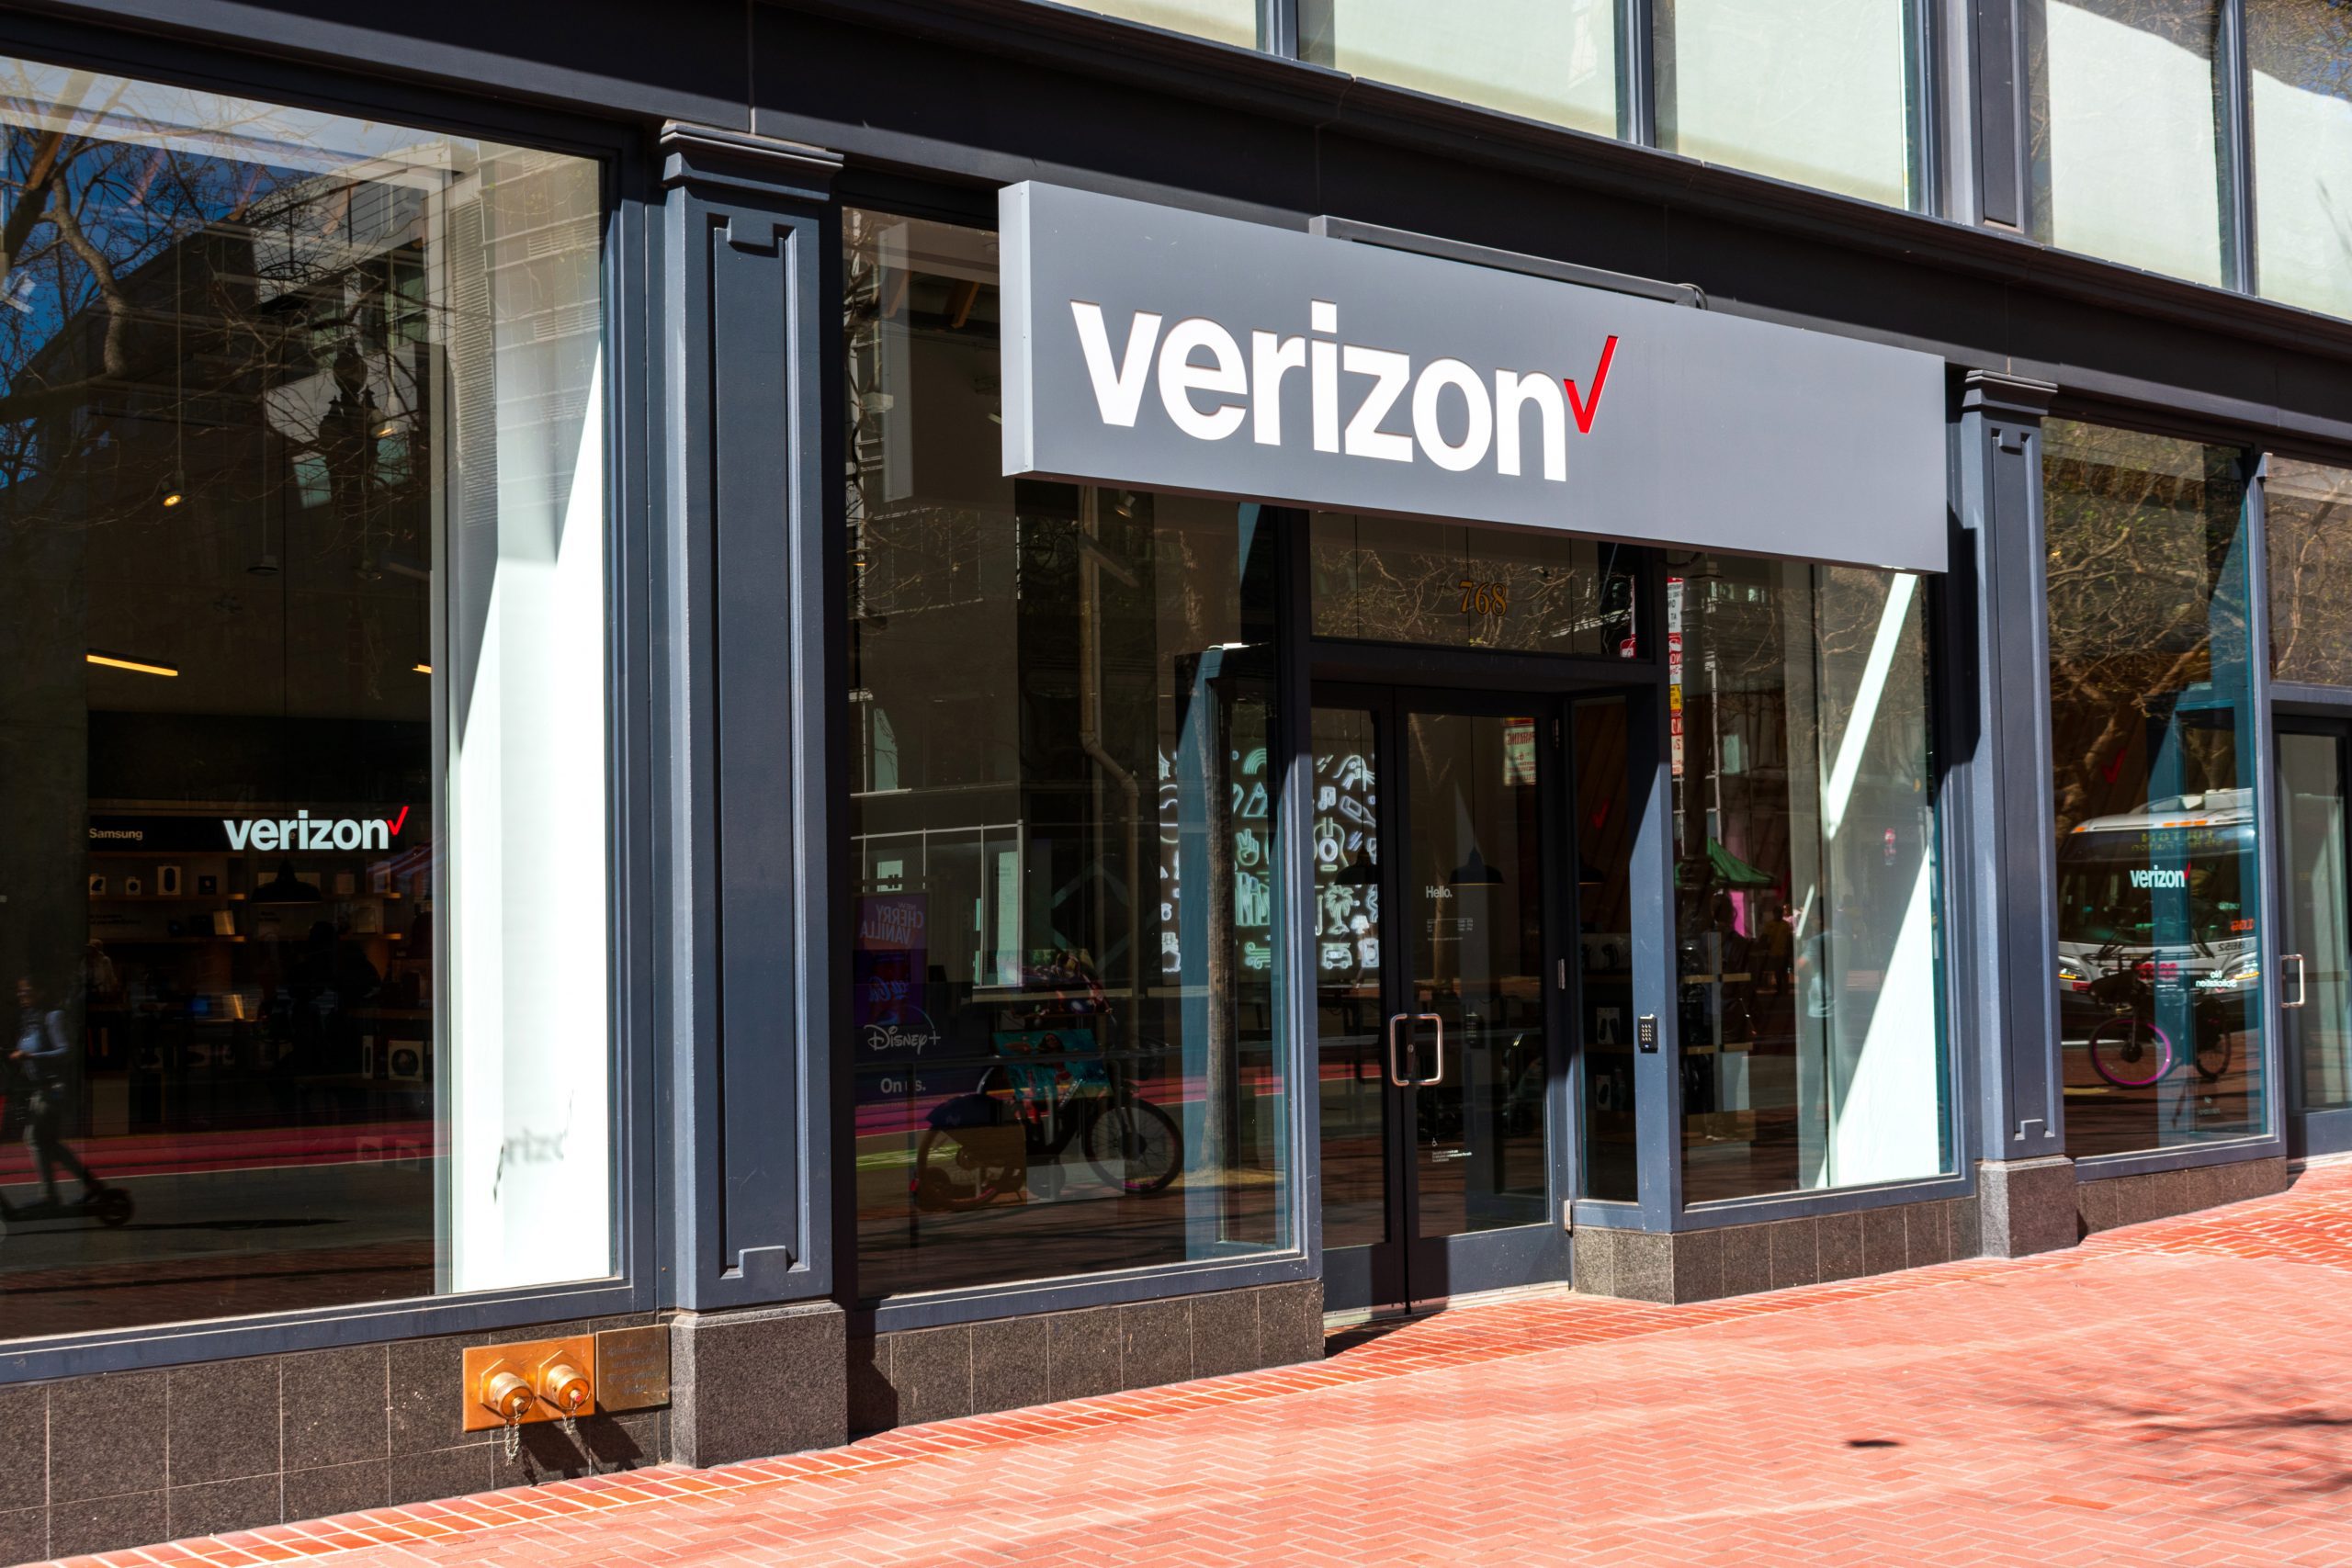 Verizon storefront on a sunny day